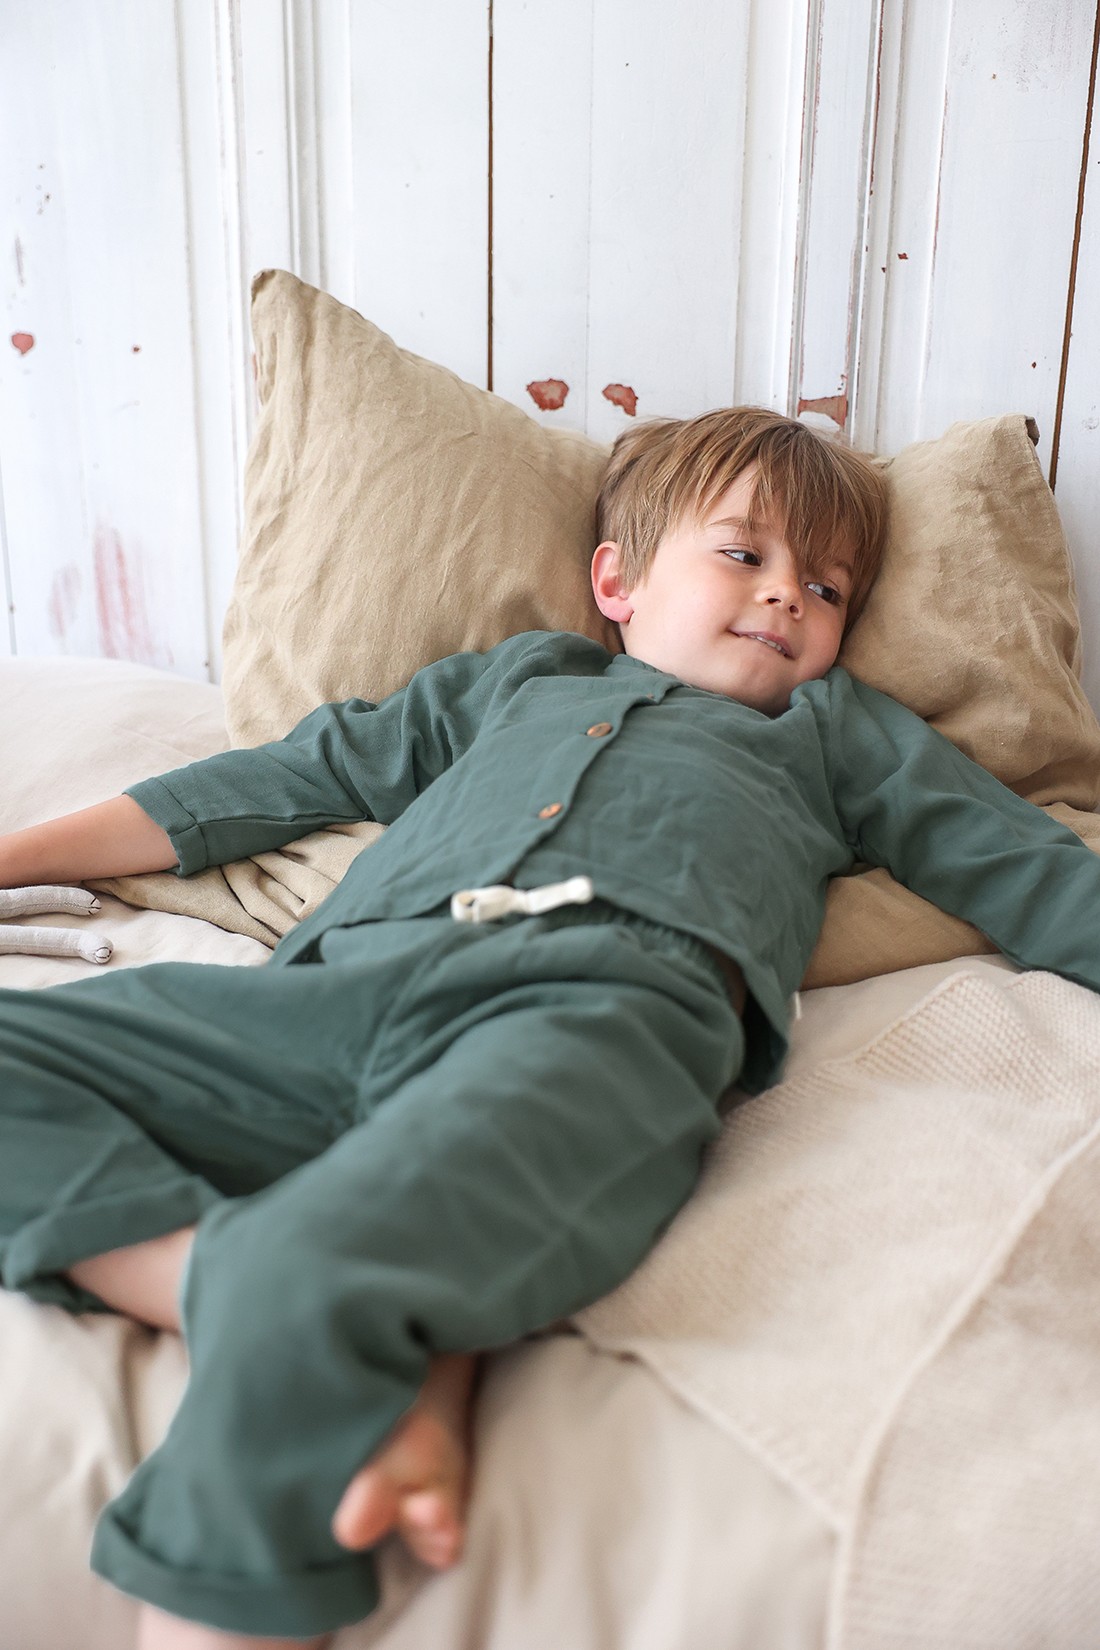 Pyjama enfant coton biologique